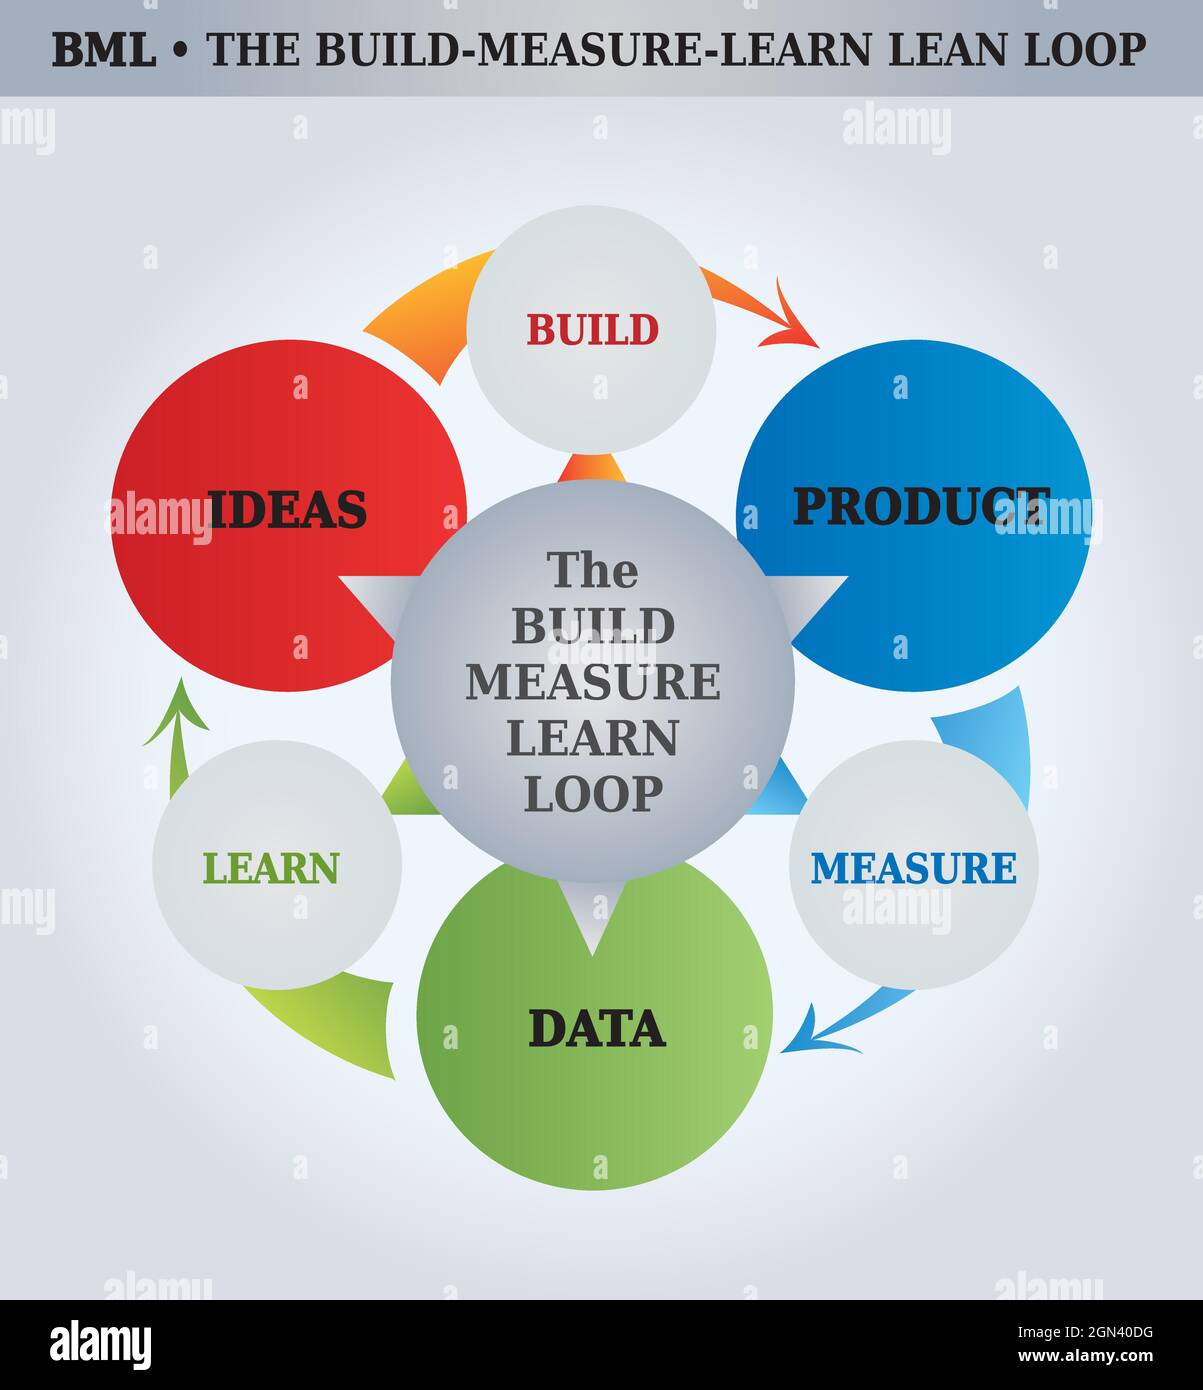 Build-Measure-Learn Lean Loop Modell - Diagramm - 3 Stufen - 3 Schritte - Coaching Tool Stock Vektor